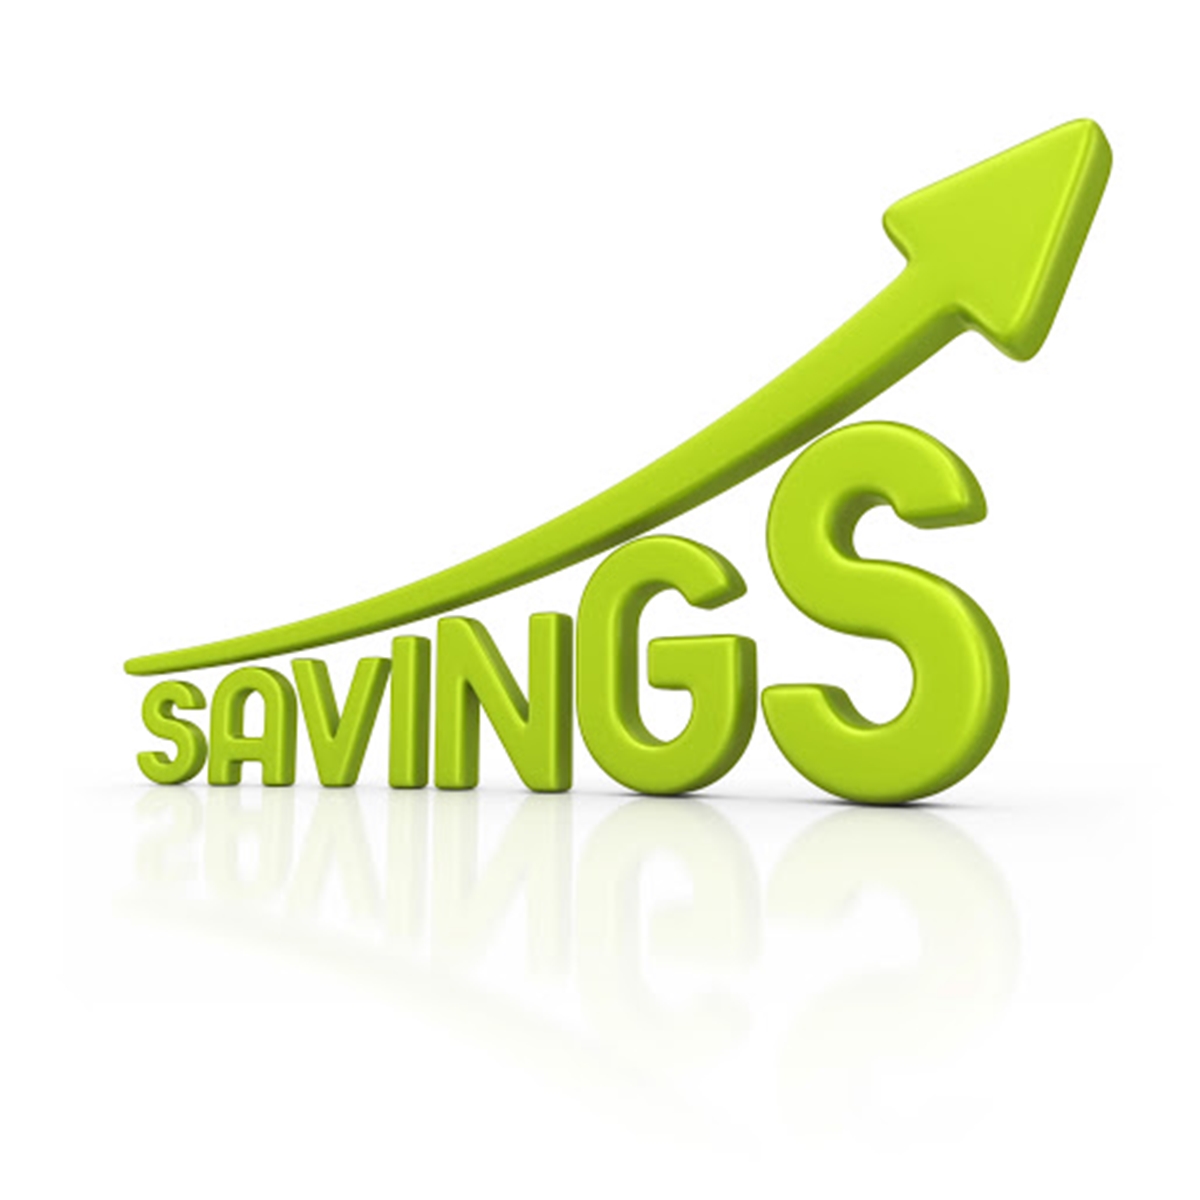 SaaS maximum cost savings for businesses